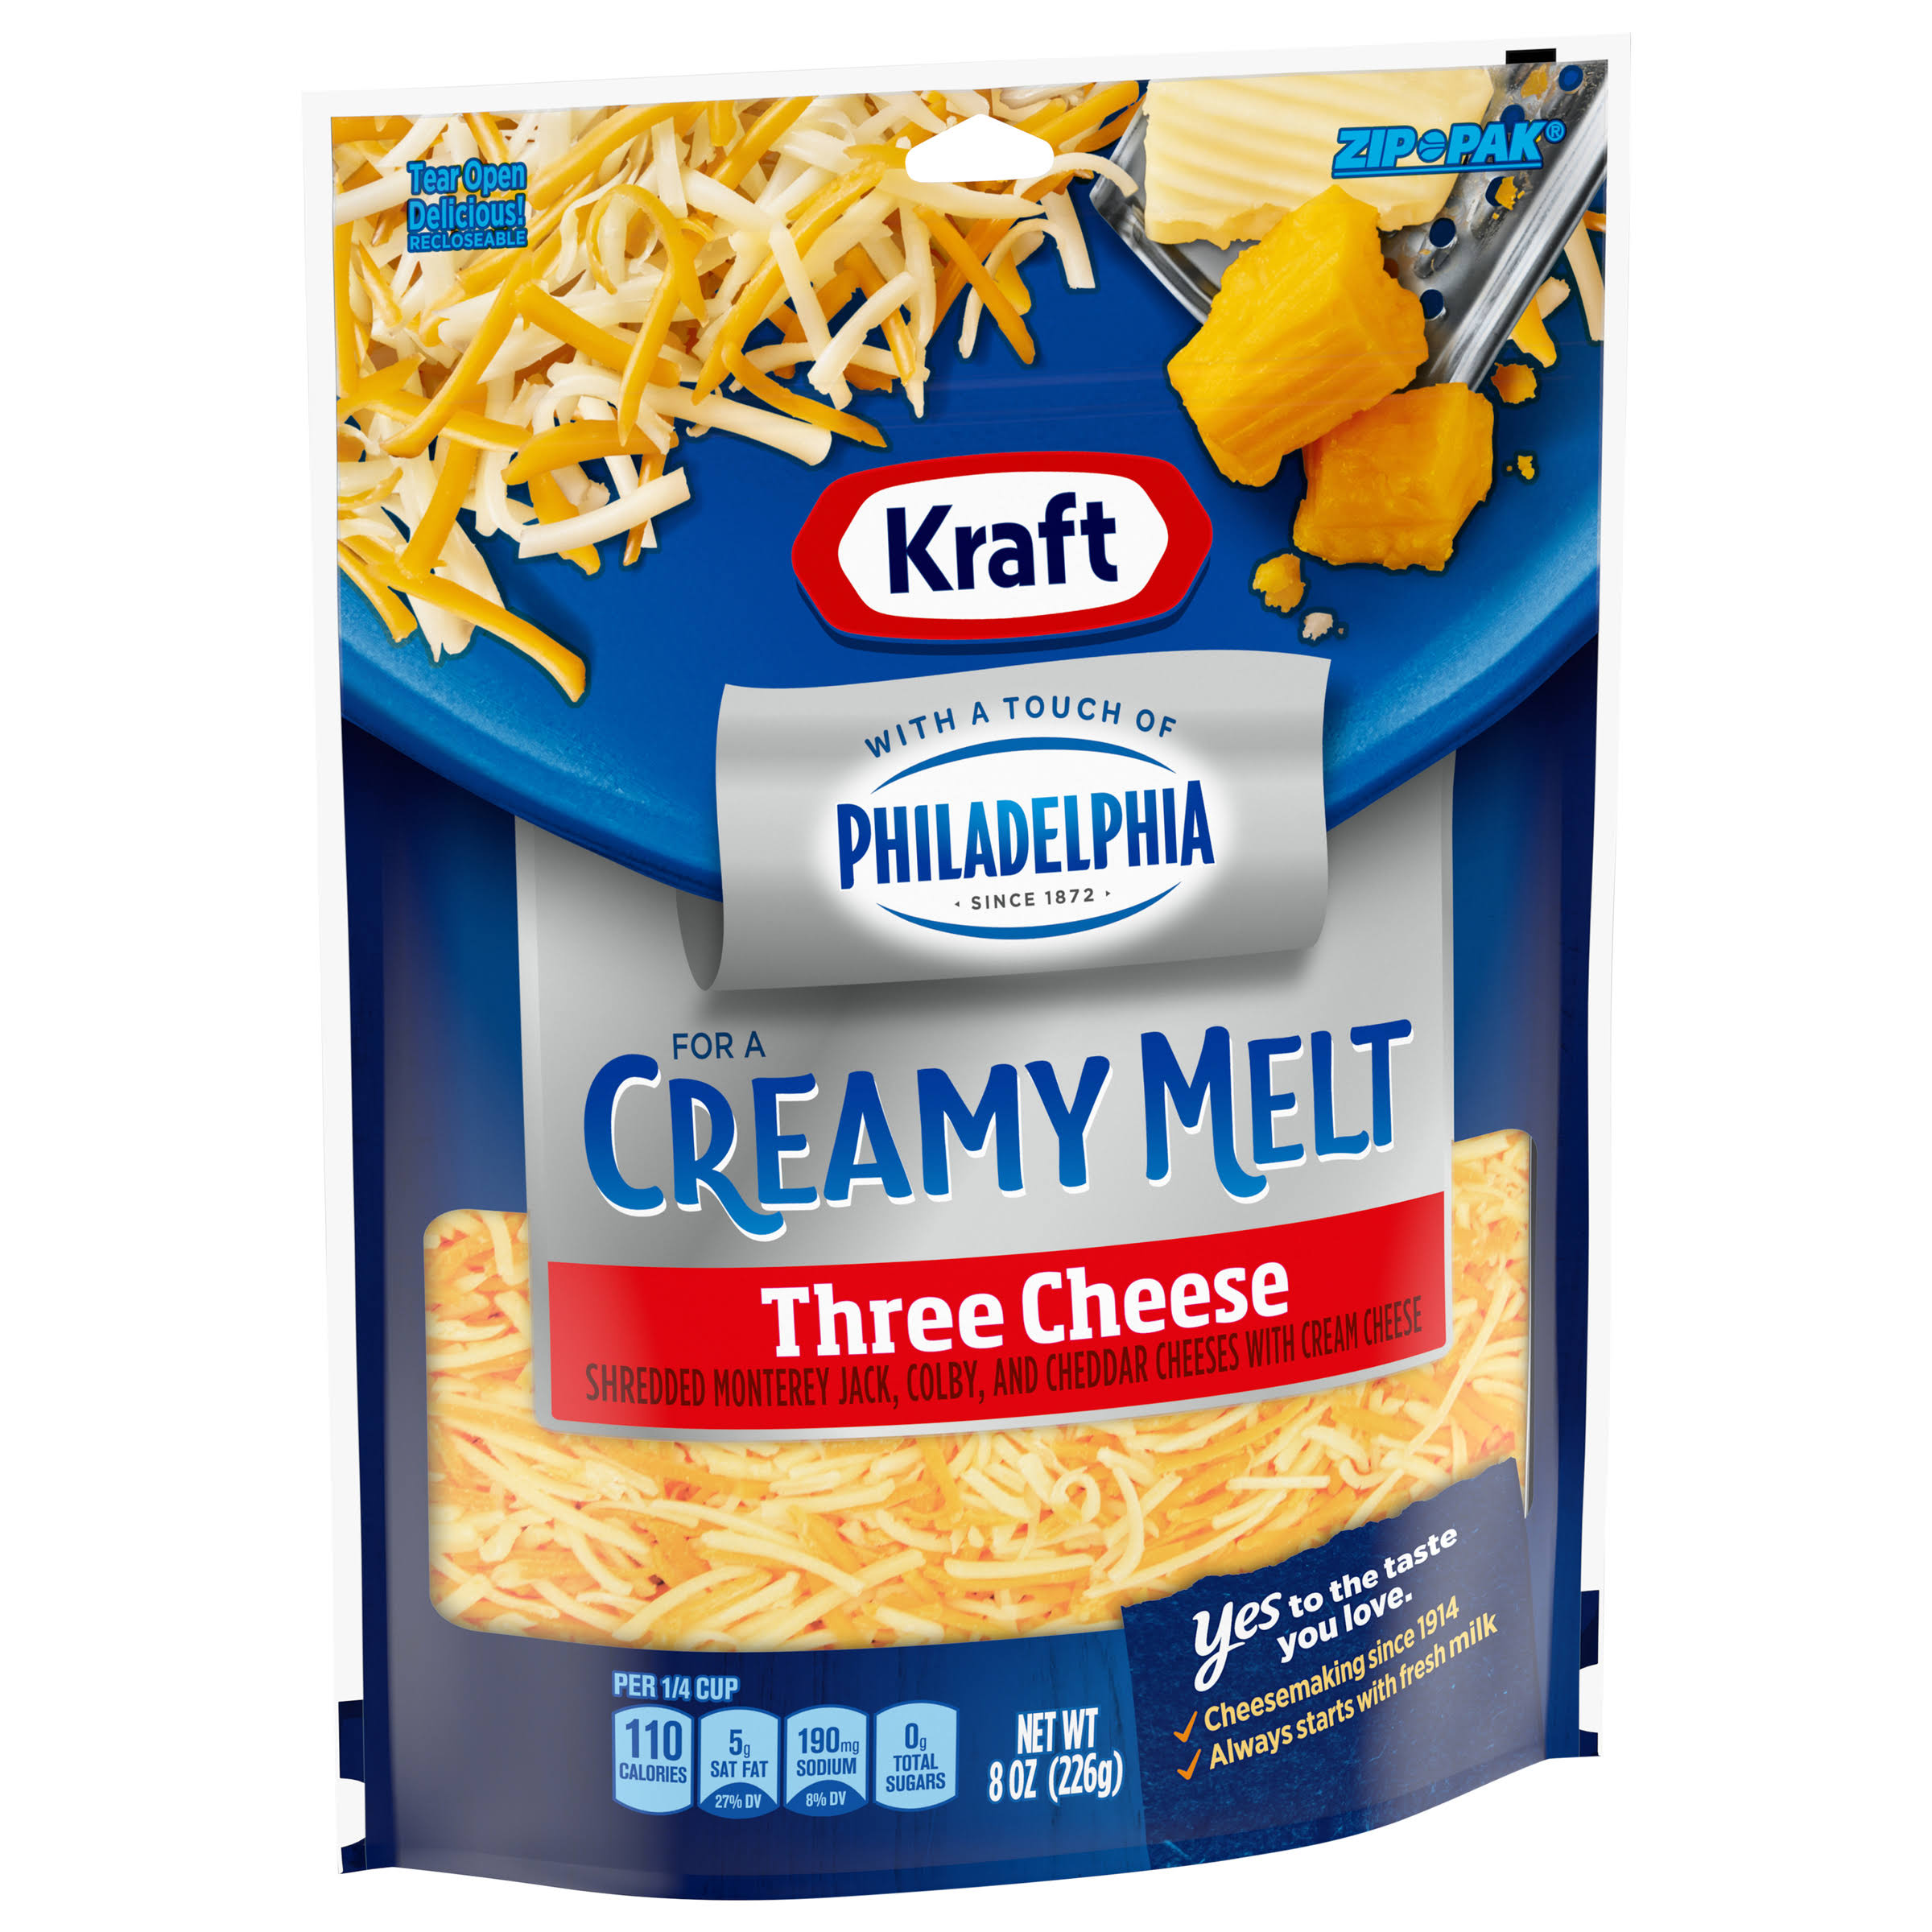 Kraft Three Cheese - 8oz